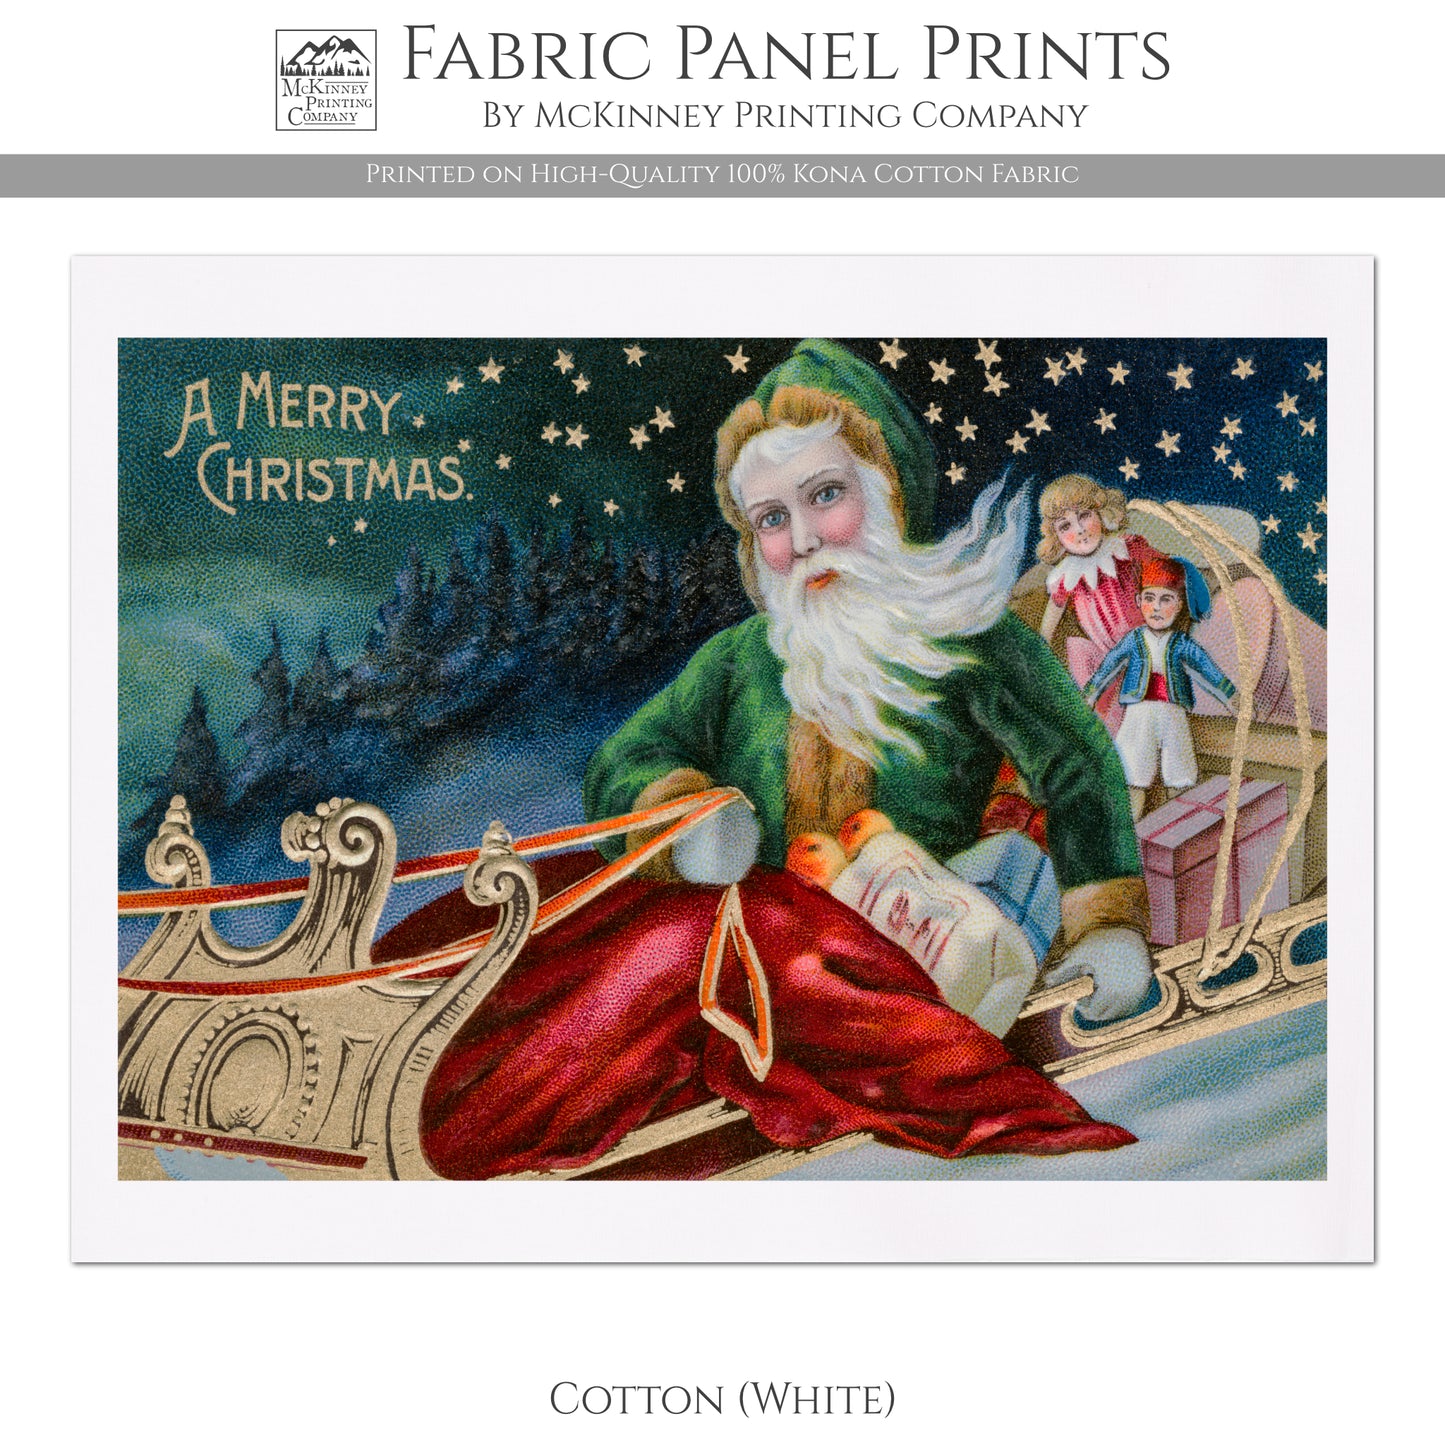 Victorian Santa, Vintage, Christmas Fabric Panel, Victorian Decor, Antique, Vintage, Fabric Panel Print - Kona Cotton, White